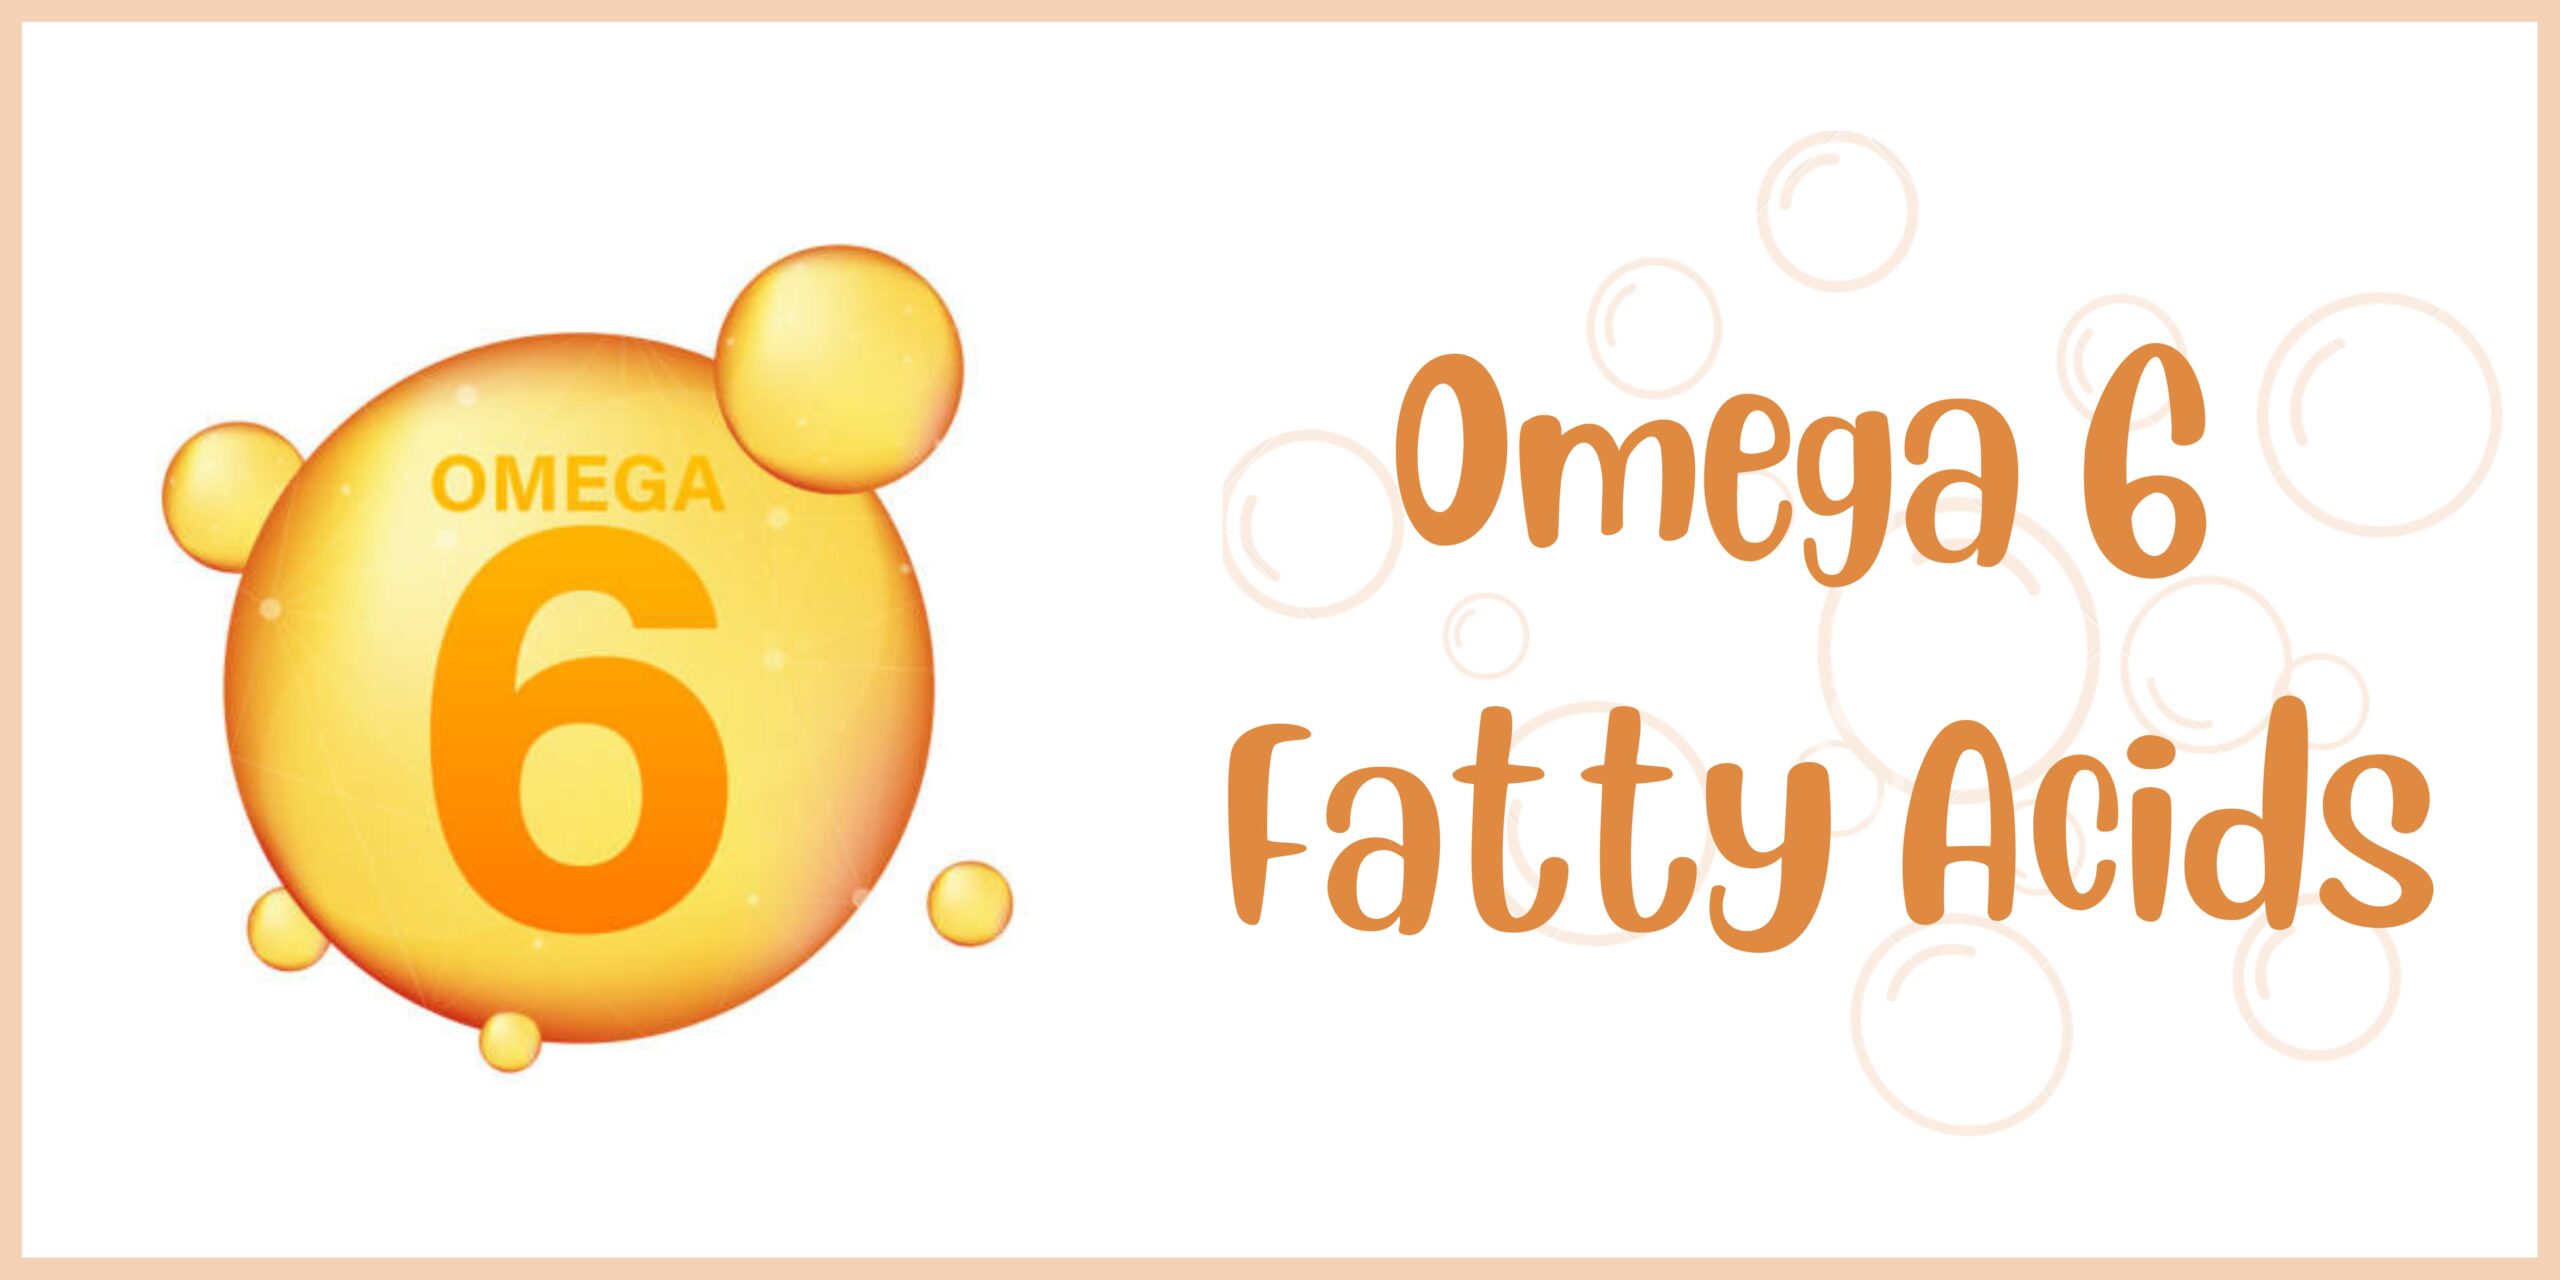 Omega-6 fatty acids!